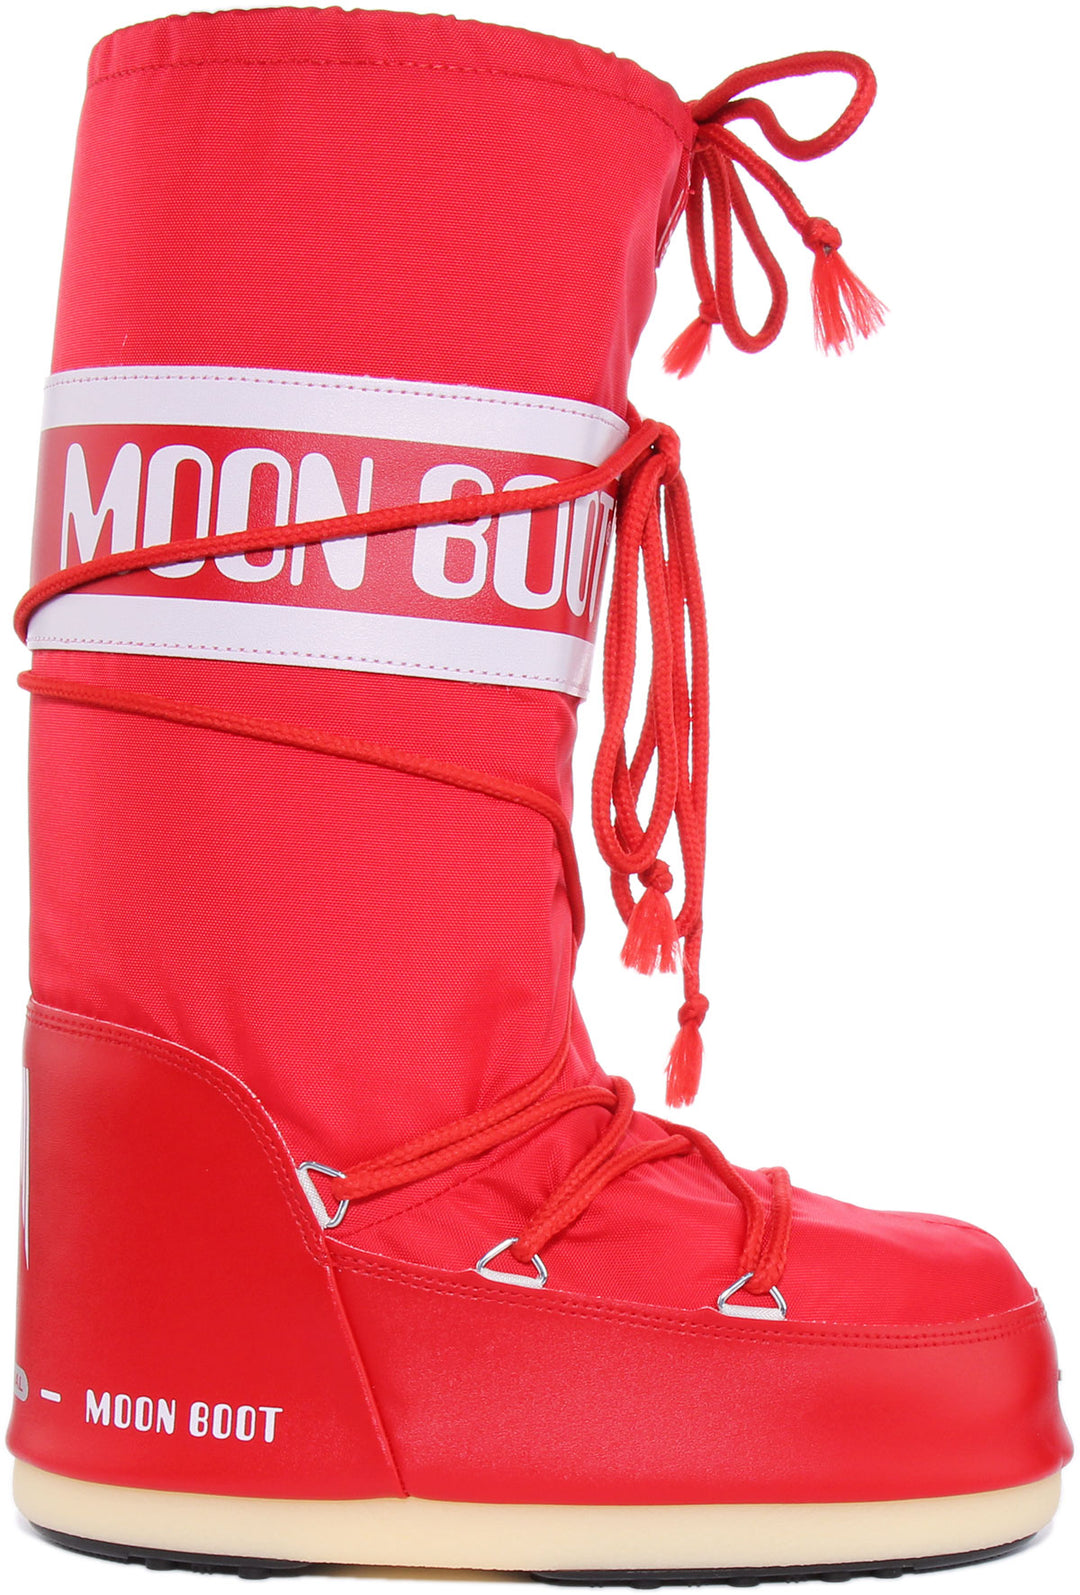 Moon Boot Nylon Moonboot In Red For Women